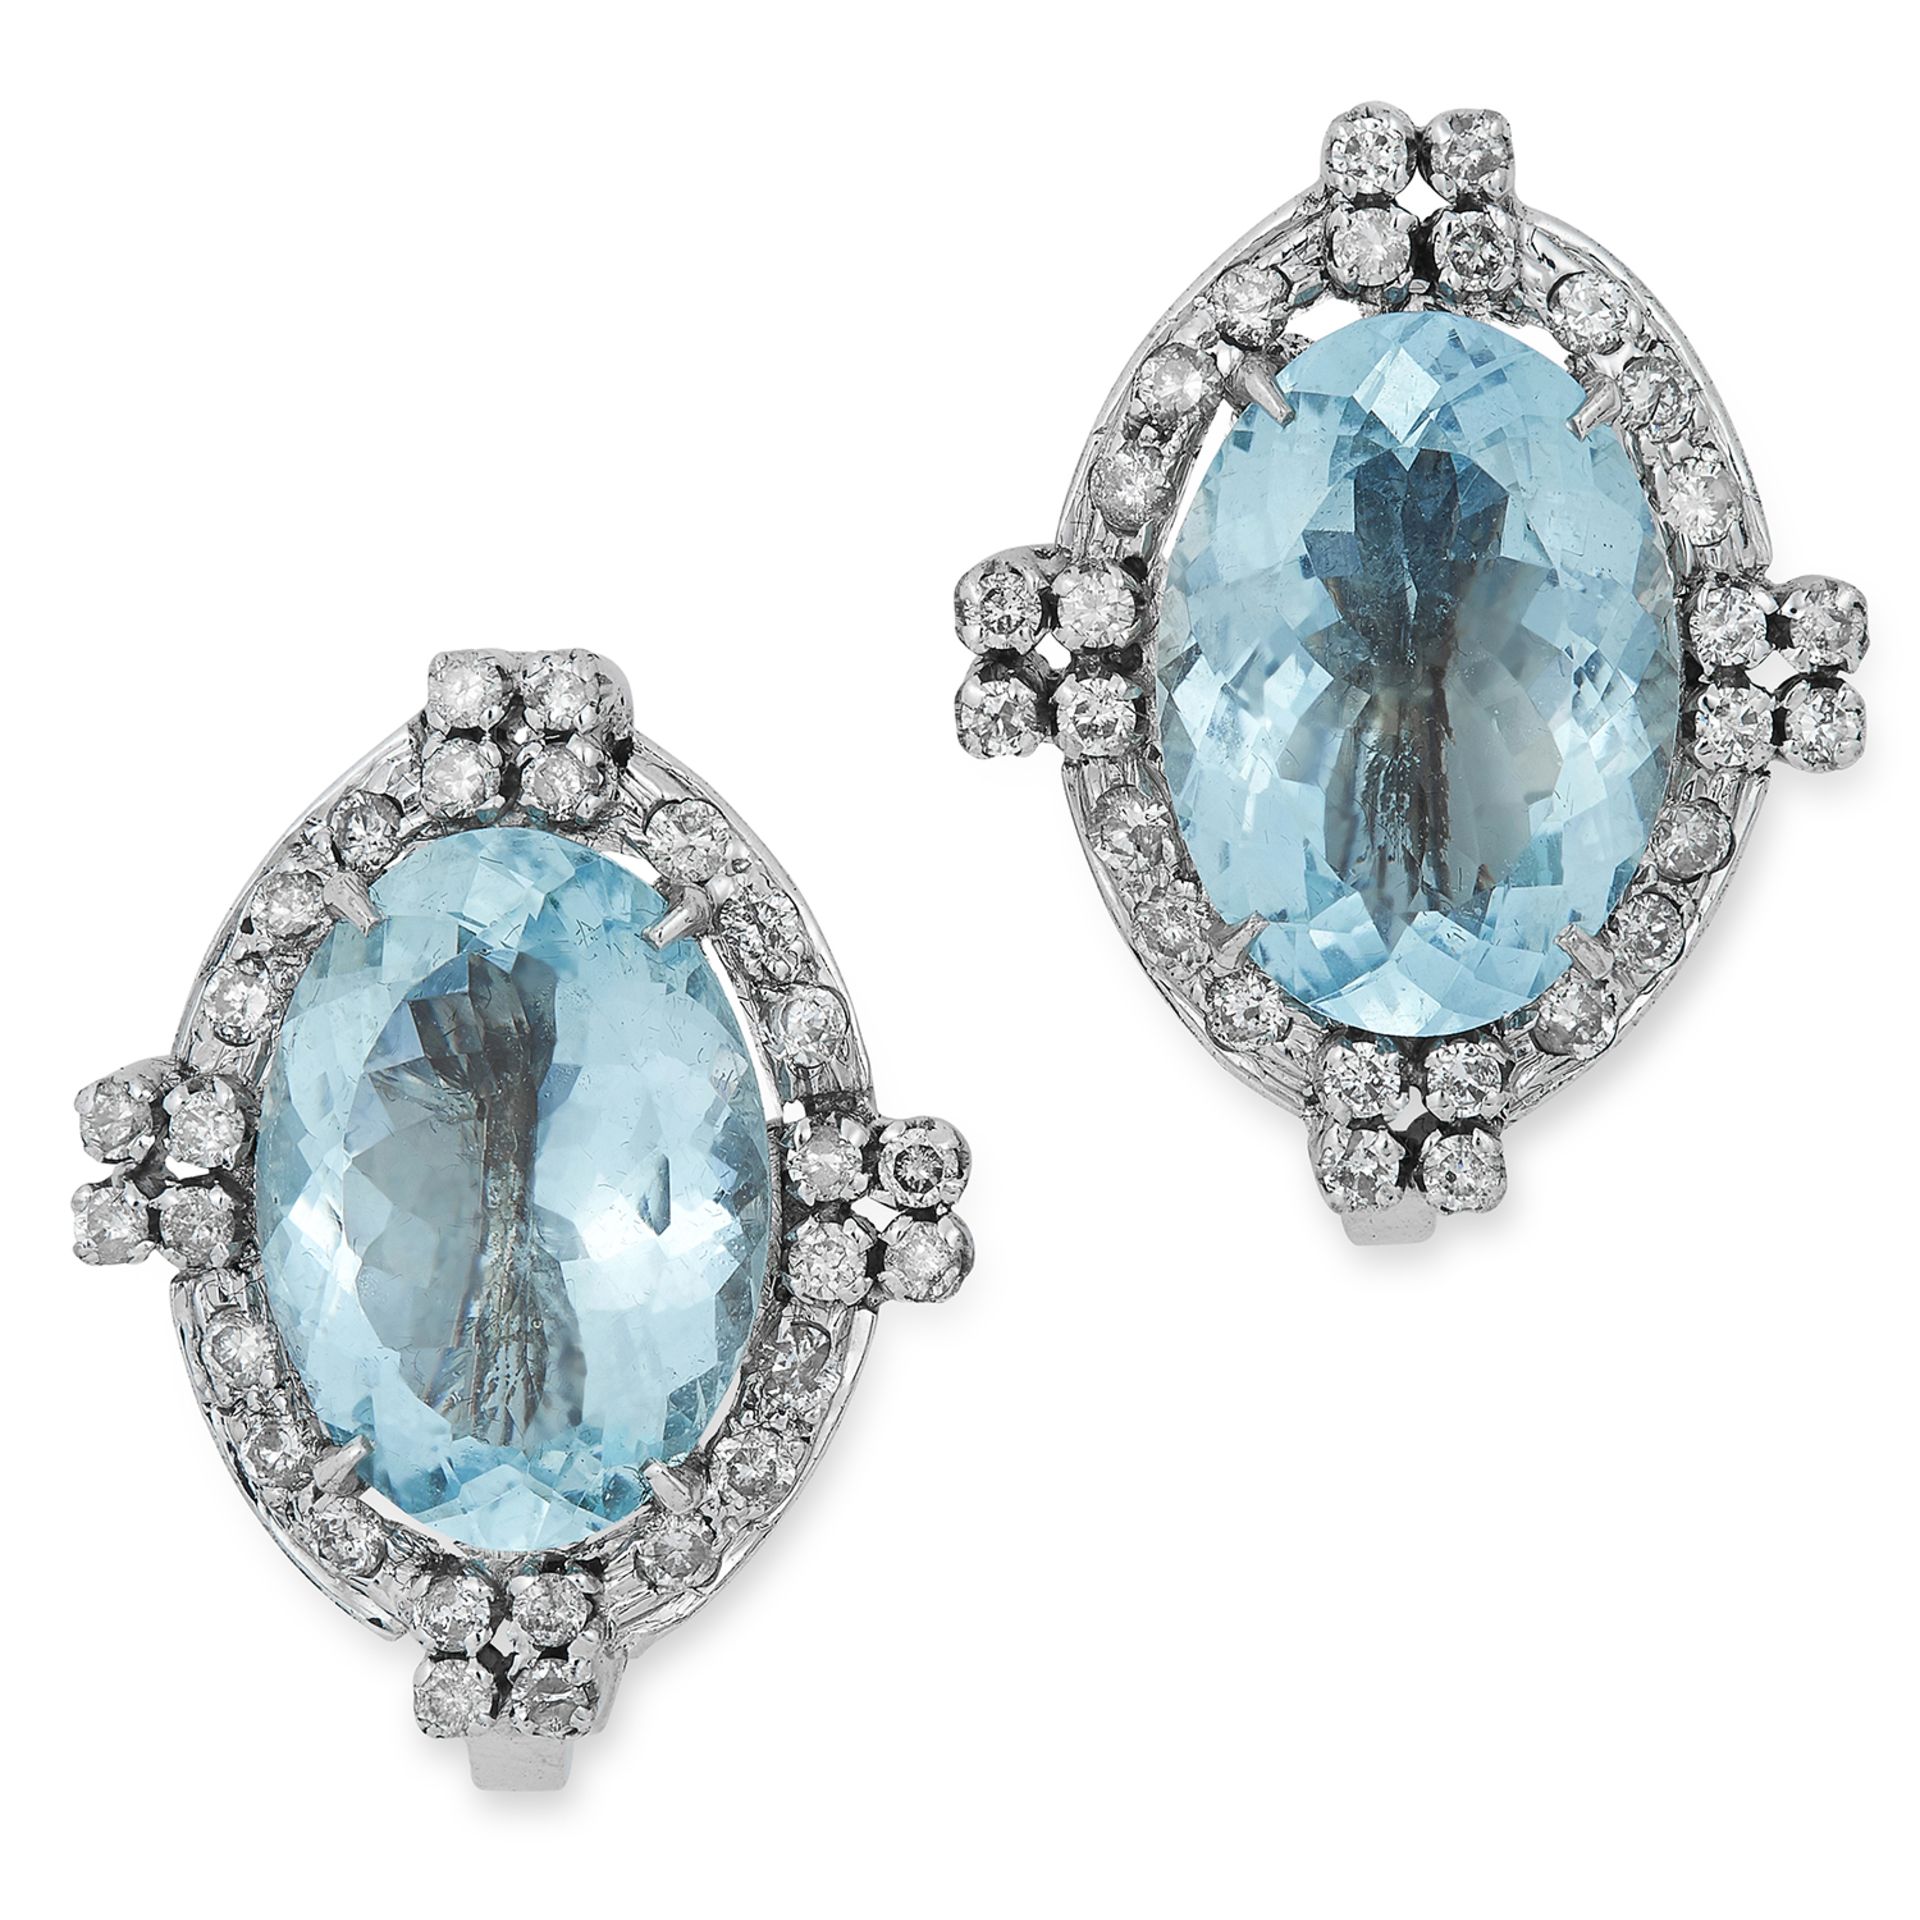 AQUAMARINE AND DIAMOND EARRINGS in Art Deco design, each set with an oval cut aquamarine in a border